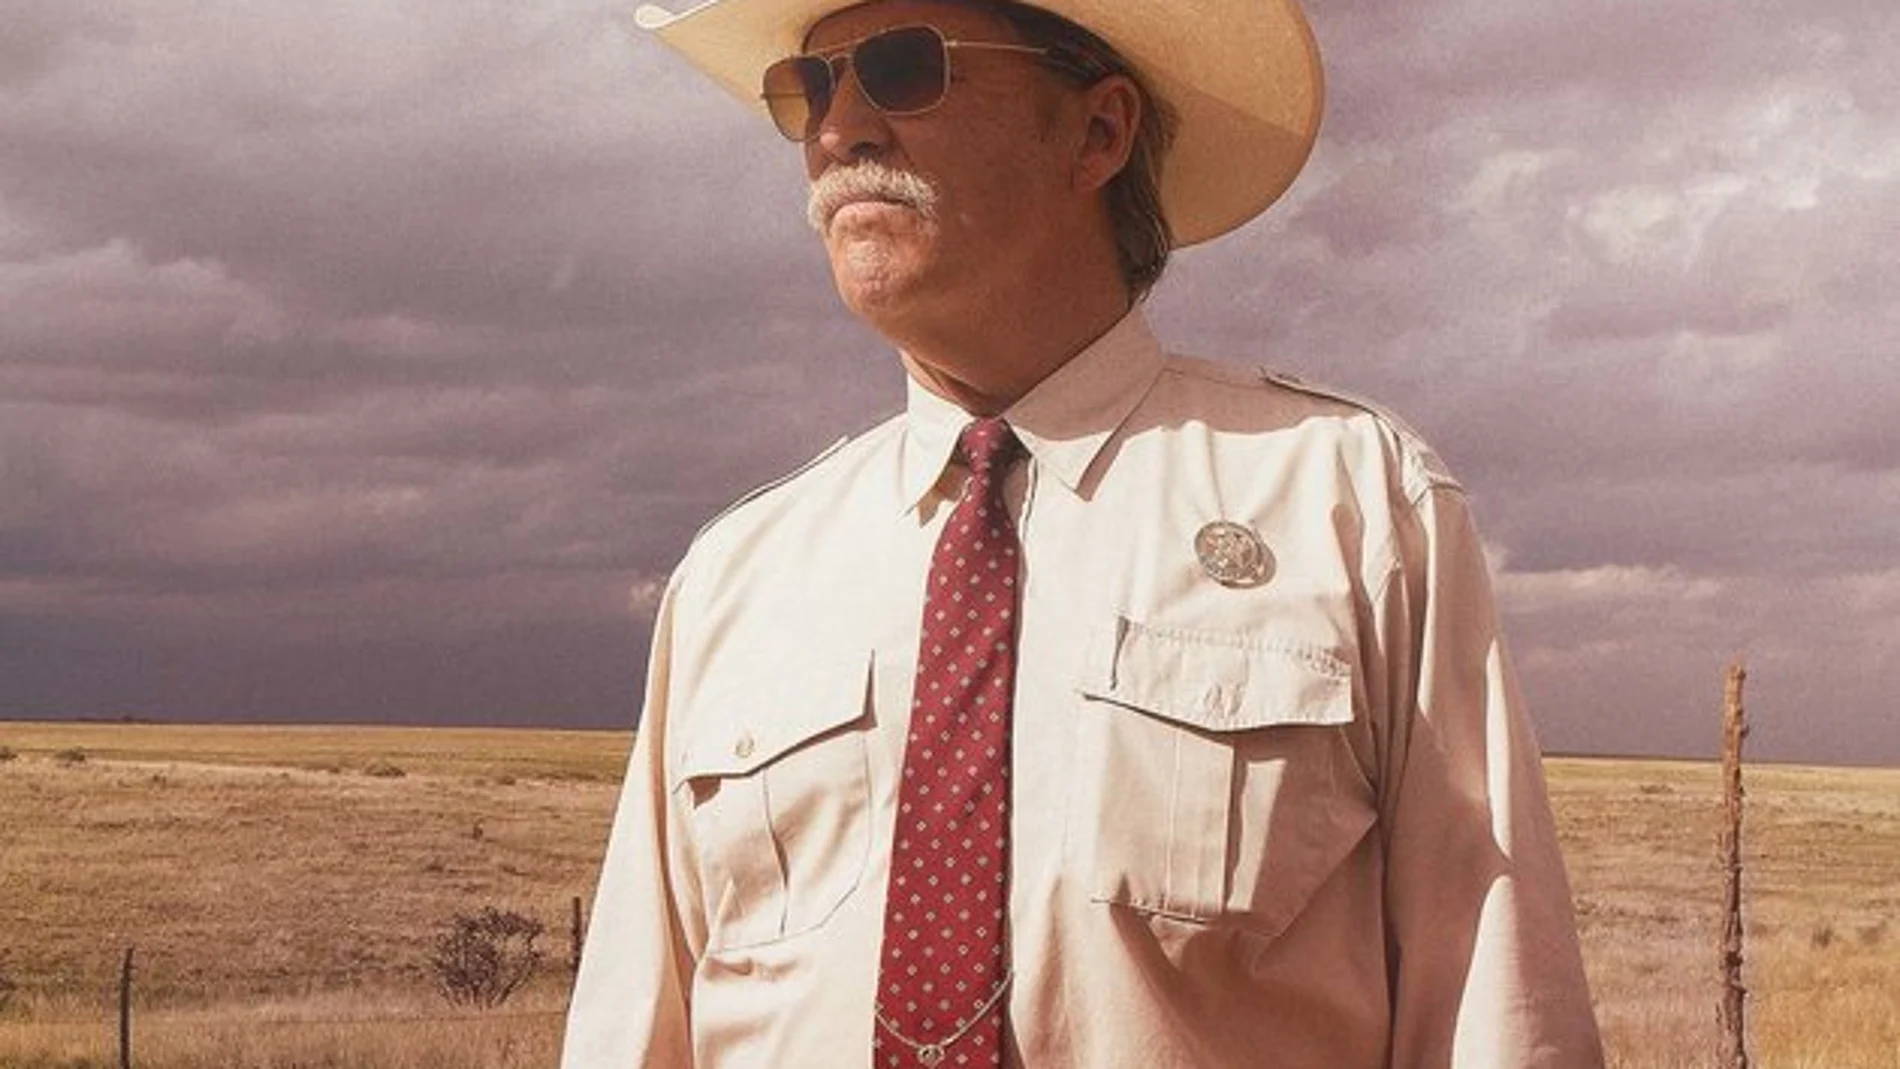 Jeff Bridges en un fotograma de la película “Comancheria”